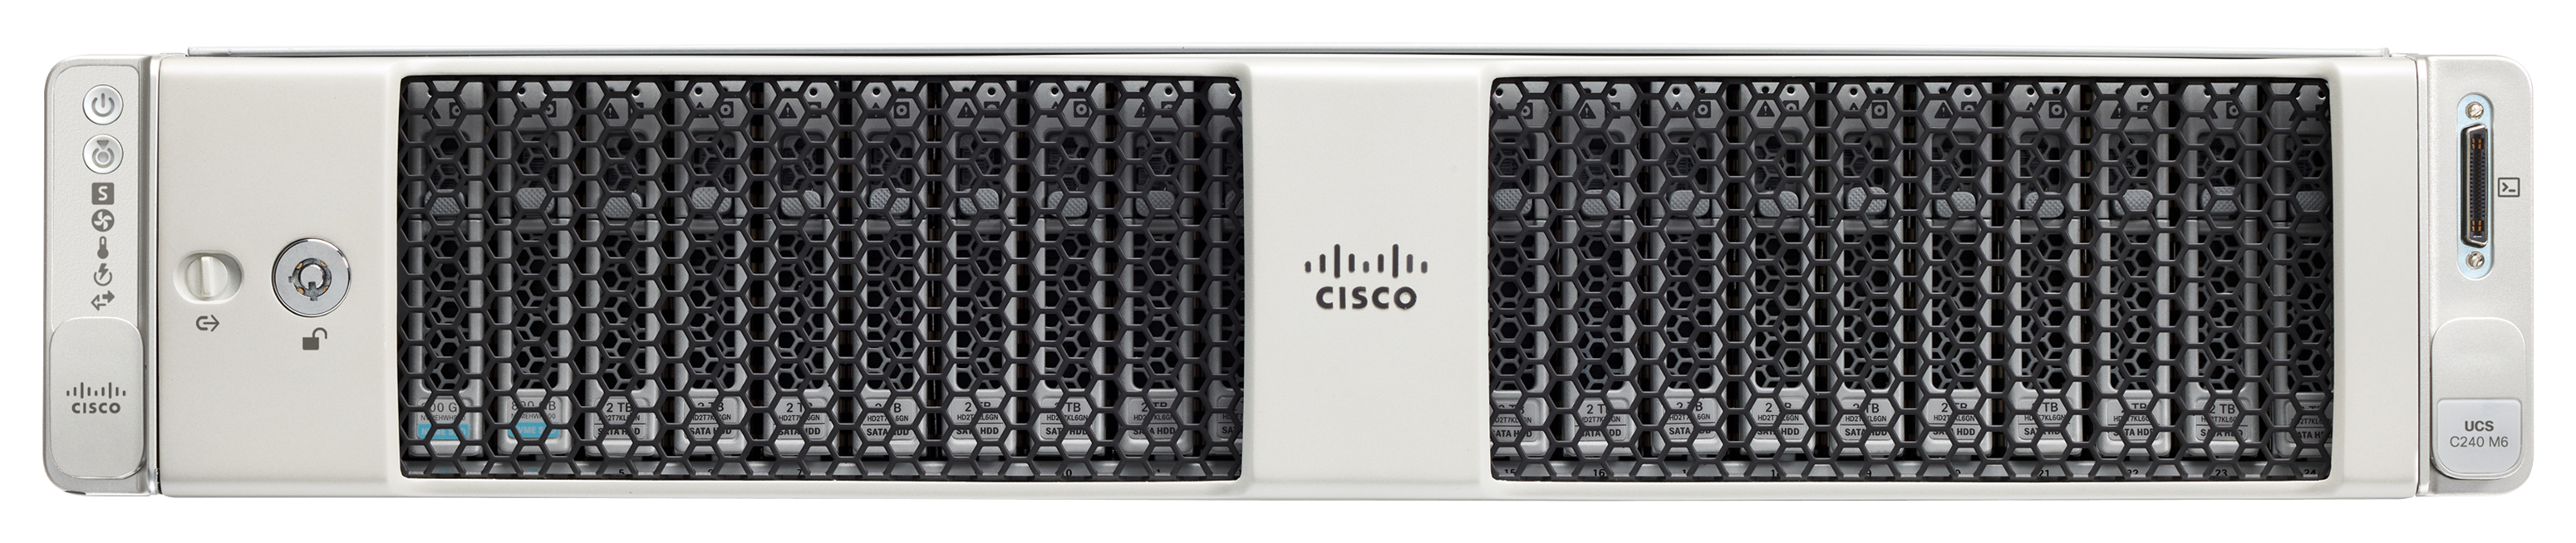 Cisco C240M6 server